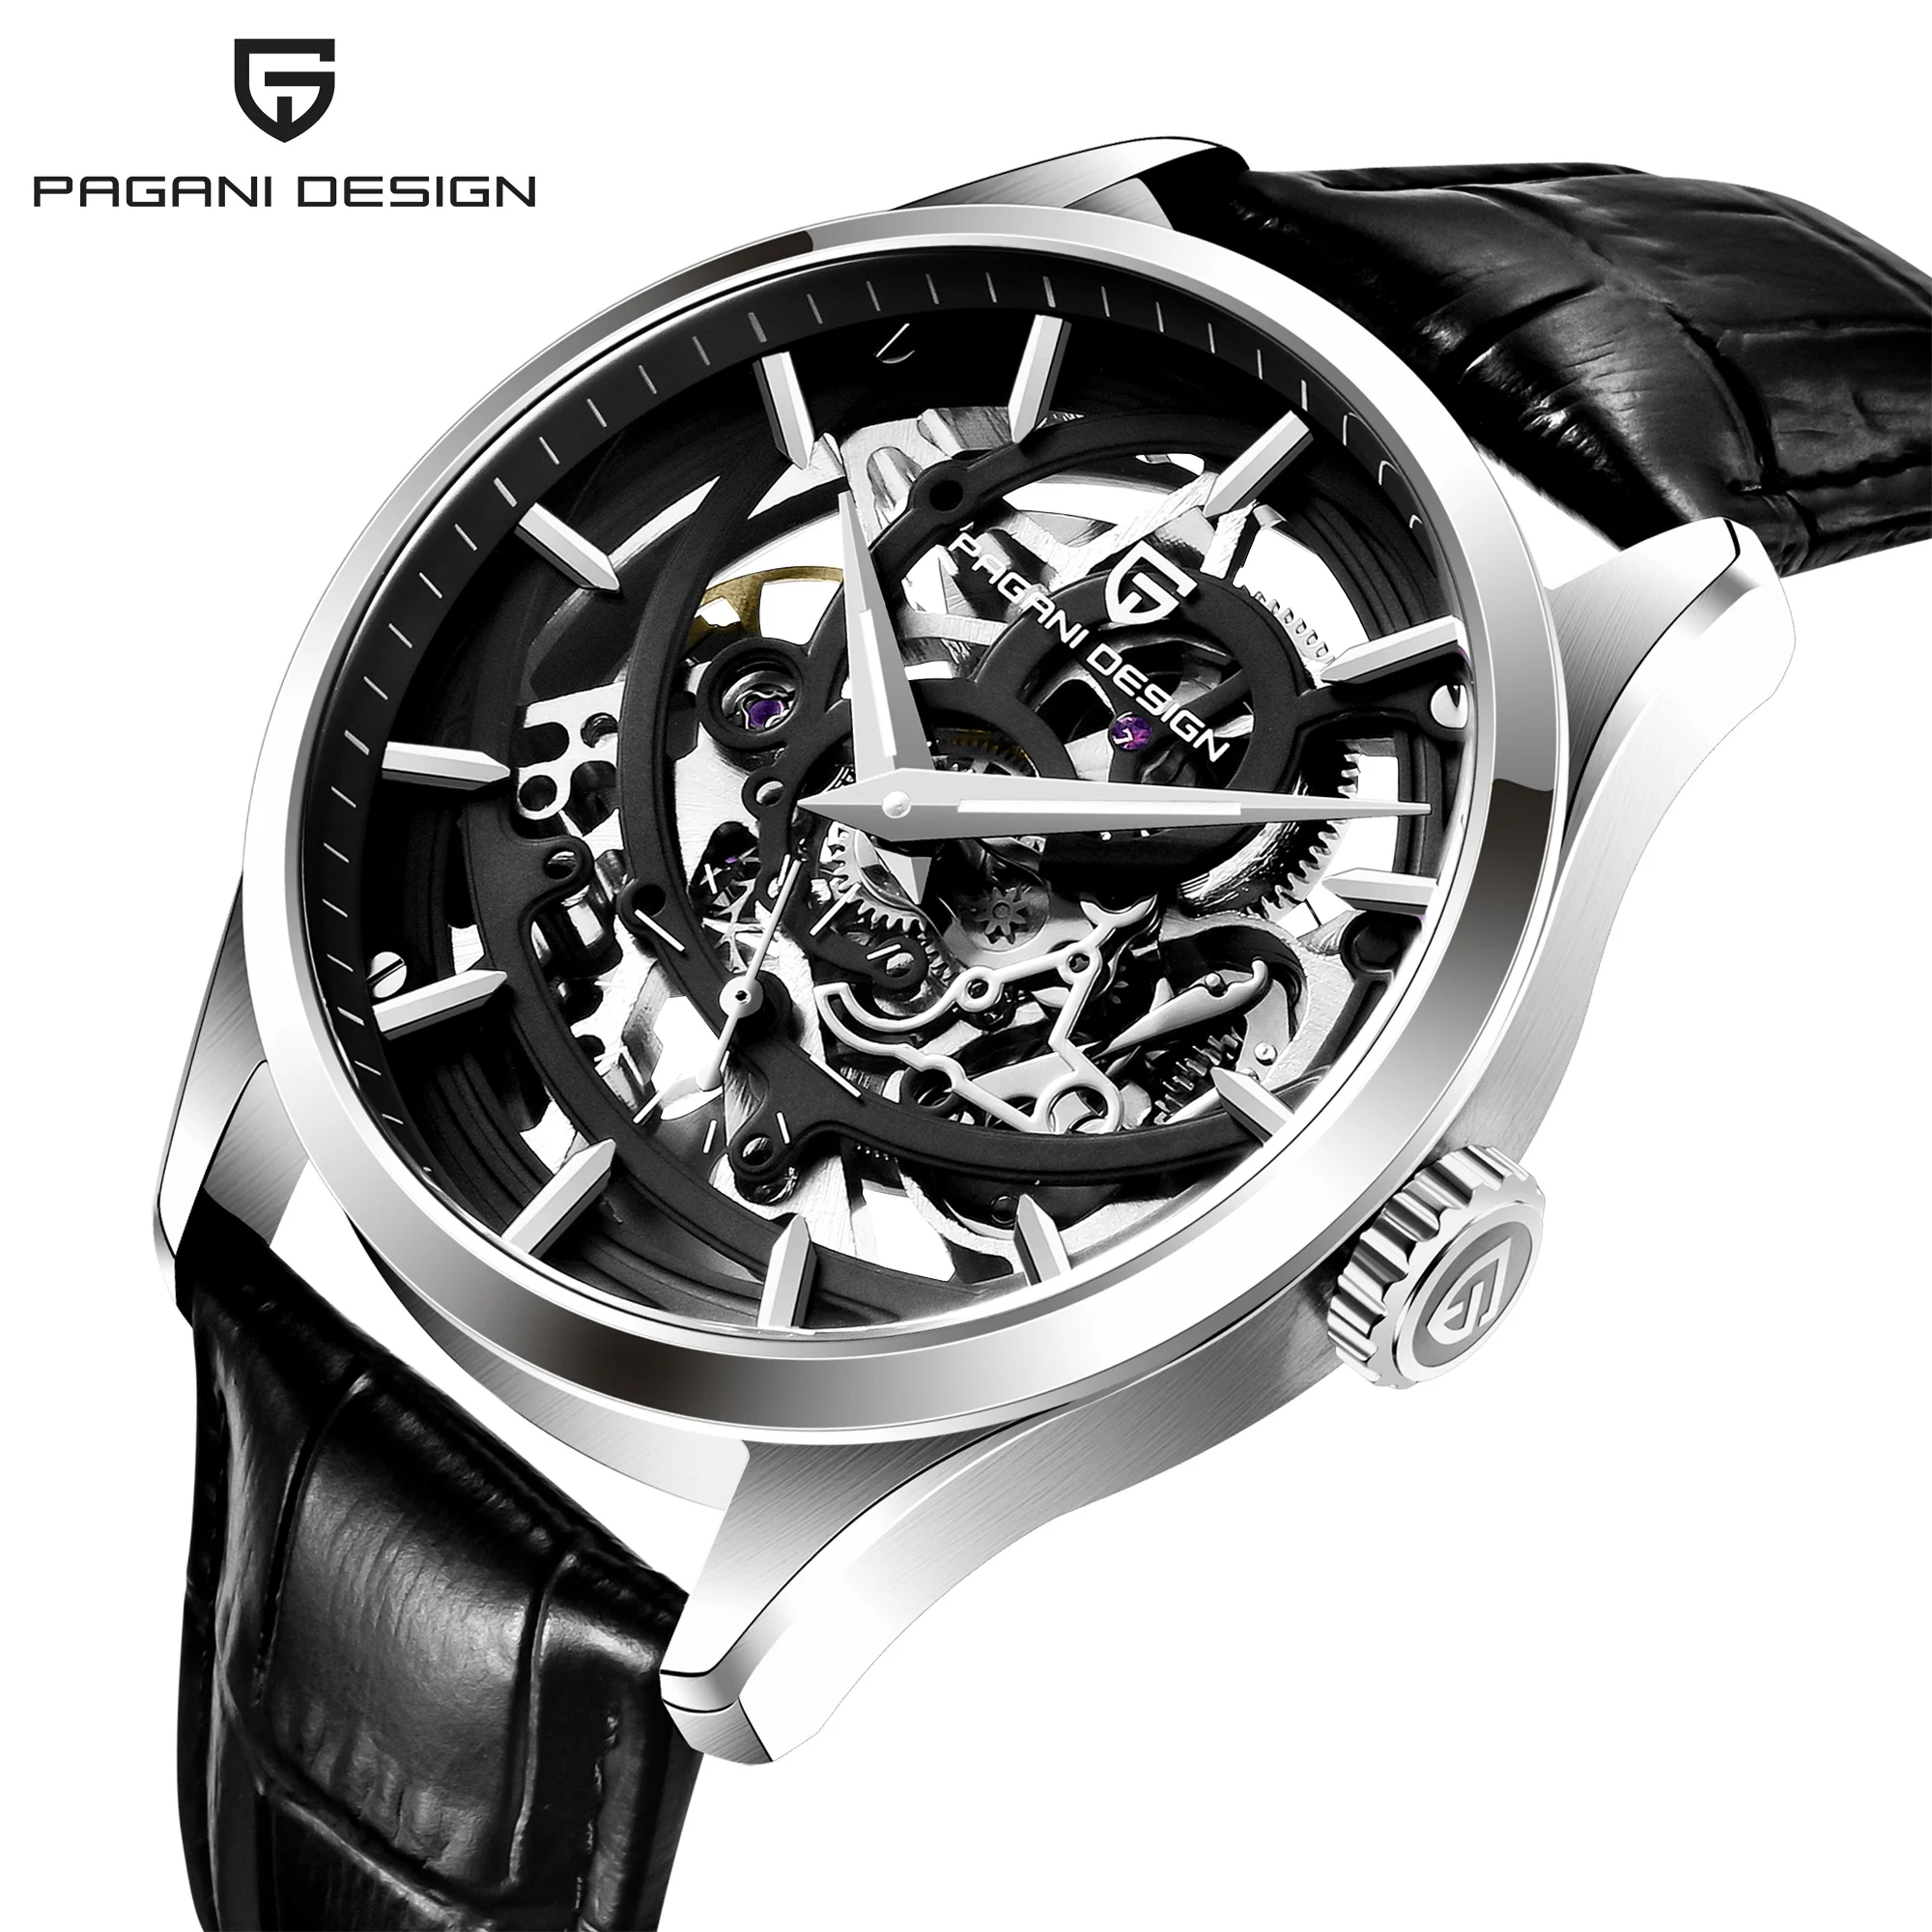 

2021 New PAGANI DESIGN Men's Automatic Mechanical Watch Brand Luxury Waterproof Watch Men Skeleton Tourbillon Watch reloj hombre